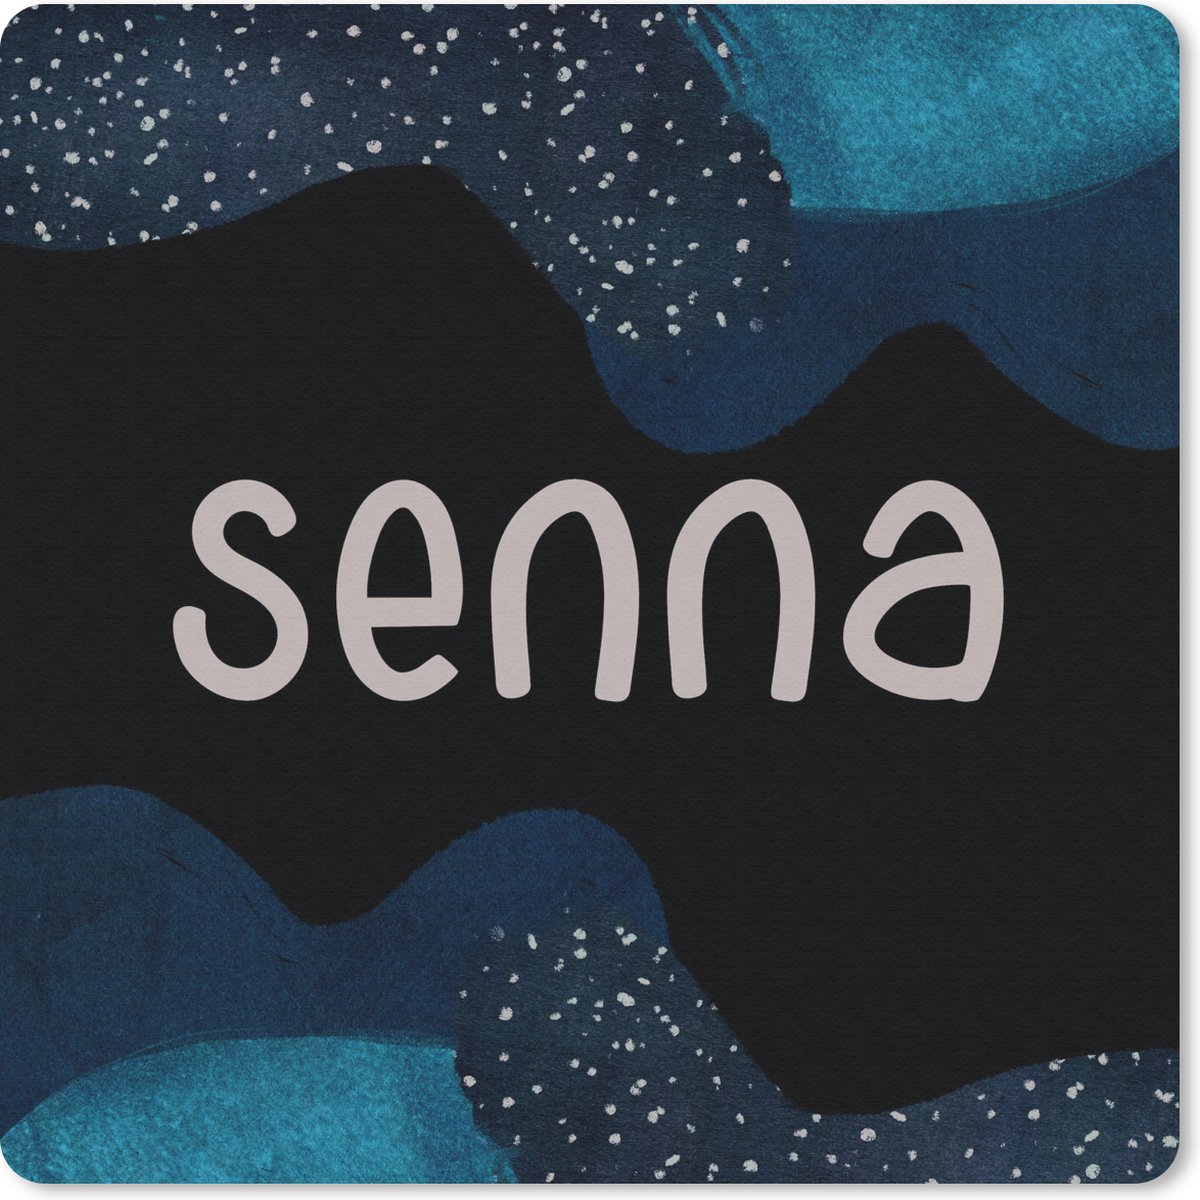 Muismat - Mousepad - Senna - Pastel - Meisje - 30x30 cm - Muismatten